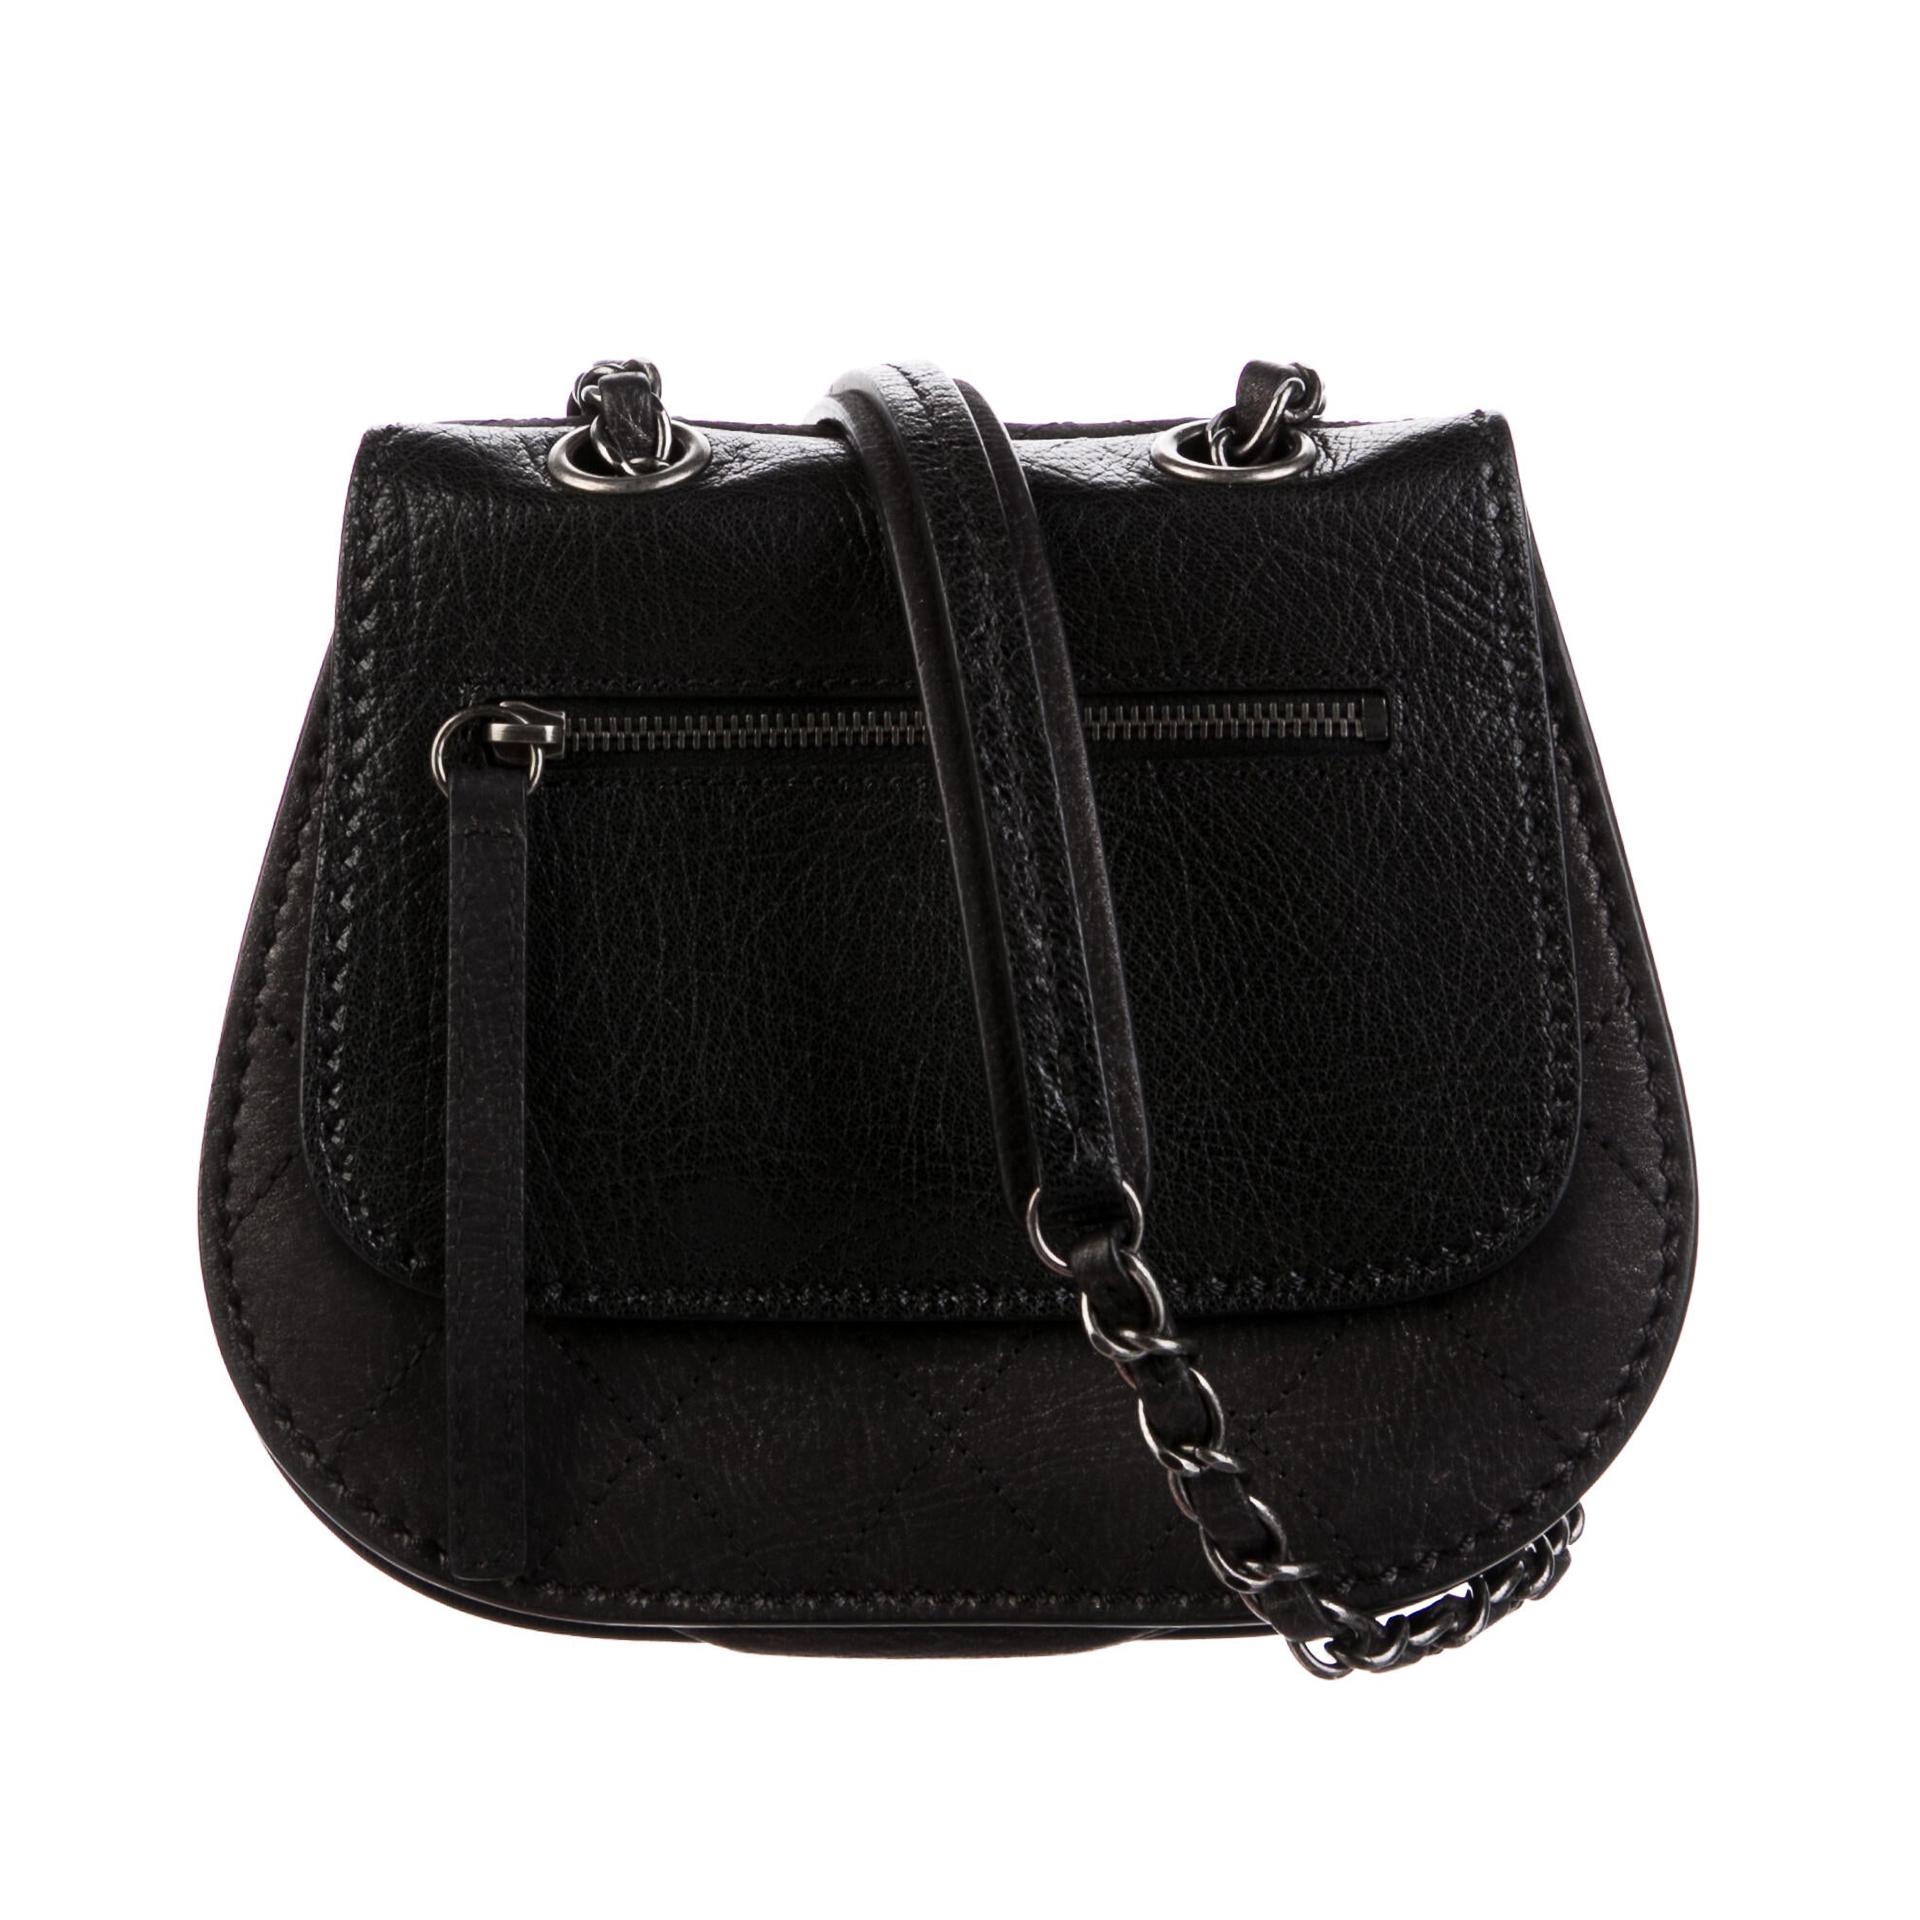 Chanel 2013 Paris Dallas Classic Flap Small Mini Quilted Saddle Black Nubuck Bag In Excellent Condition For Sale In Miami, FL